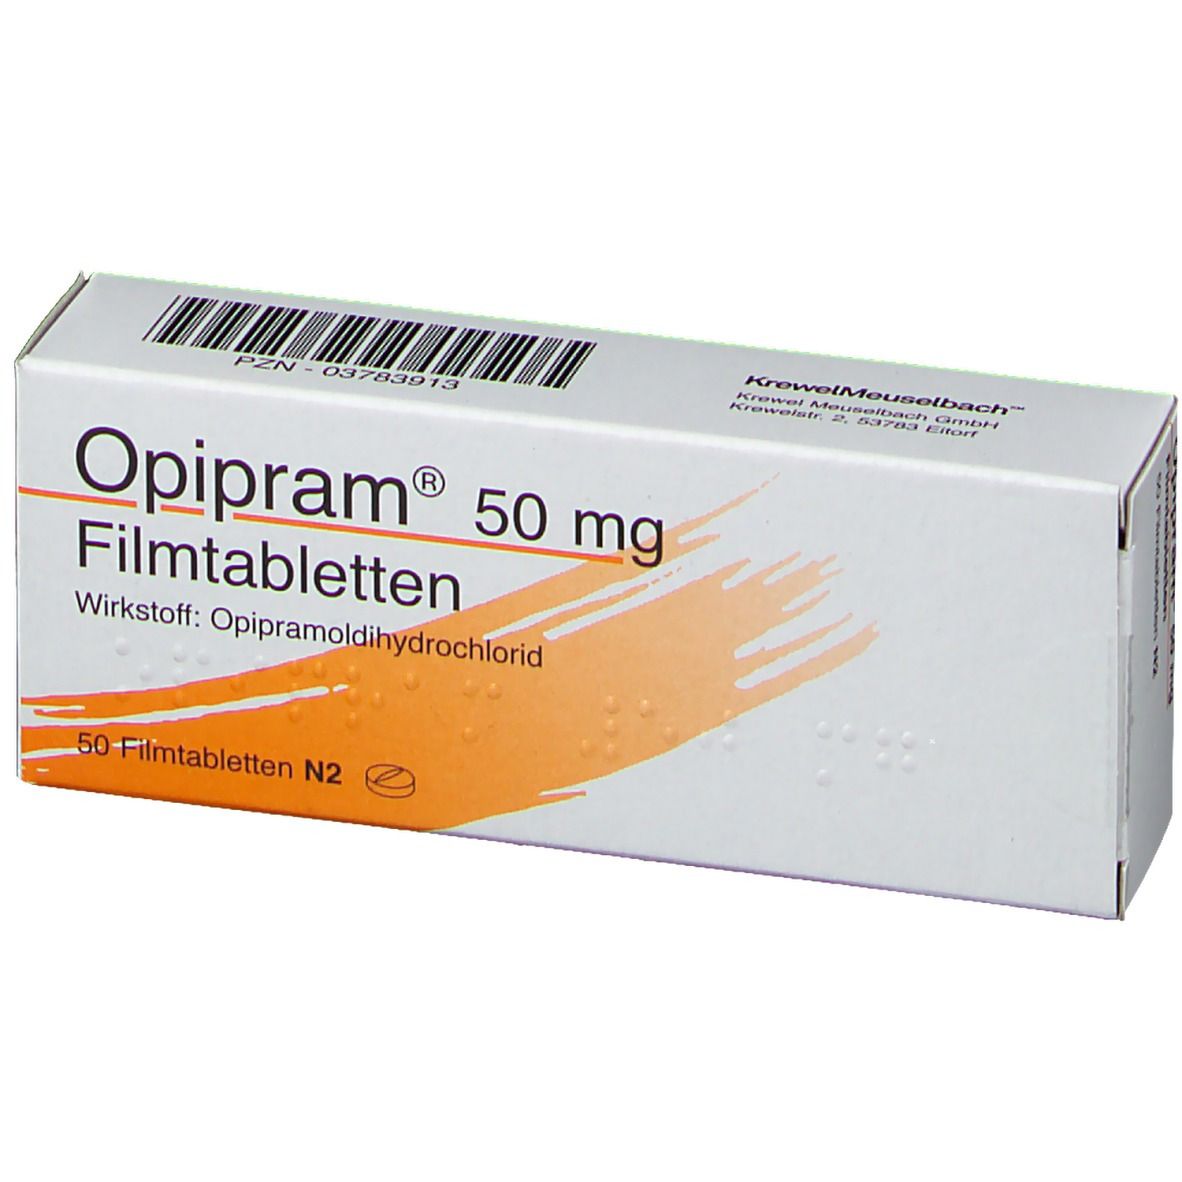 Opipram® 50 mg